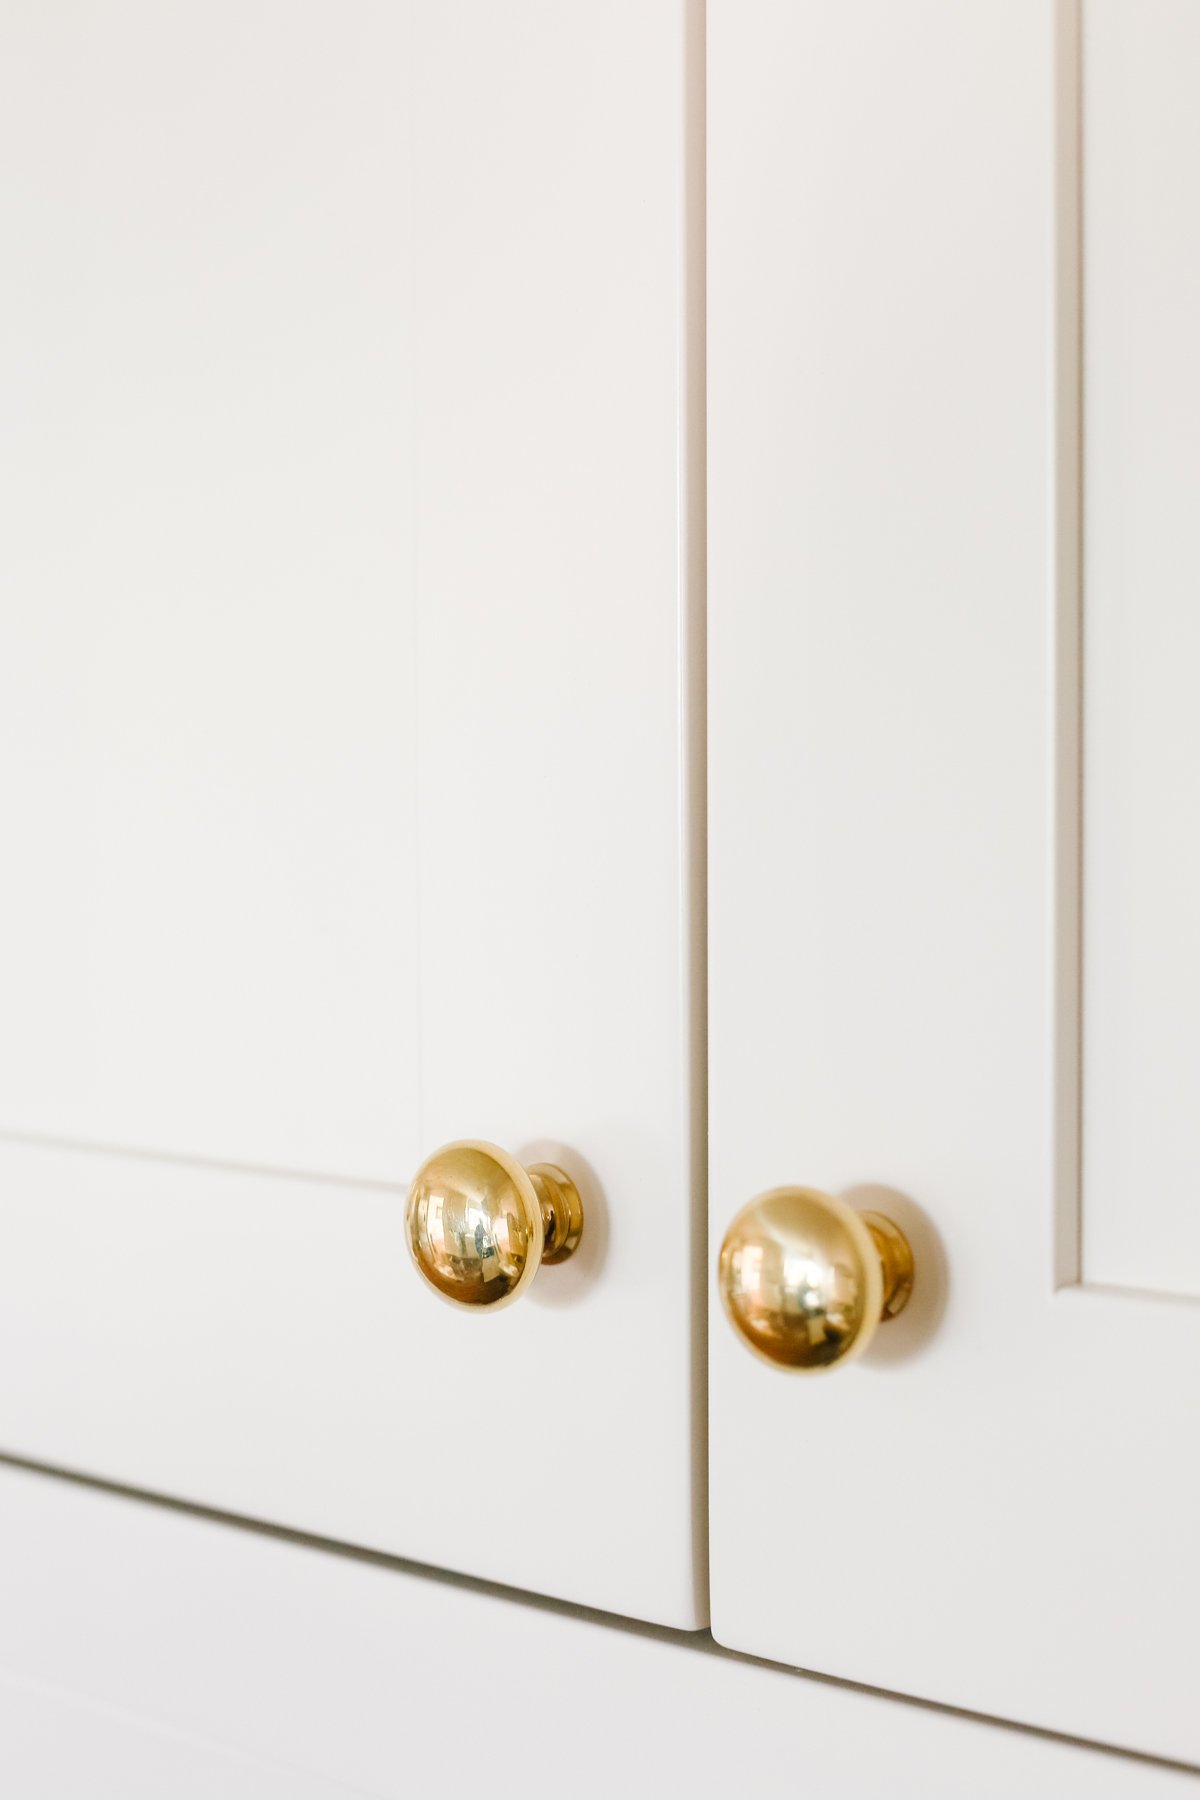 Cream kitchen cabinets with unlacquered brass hardware. 